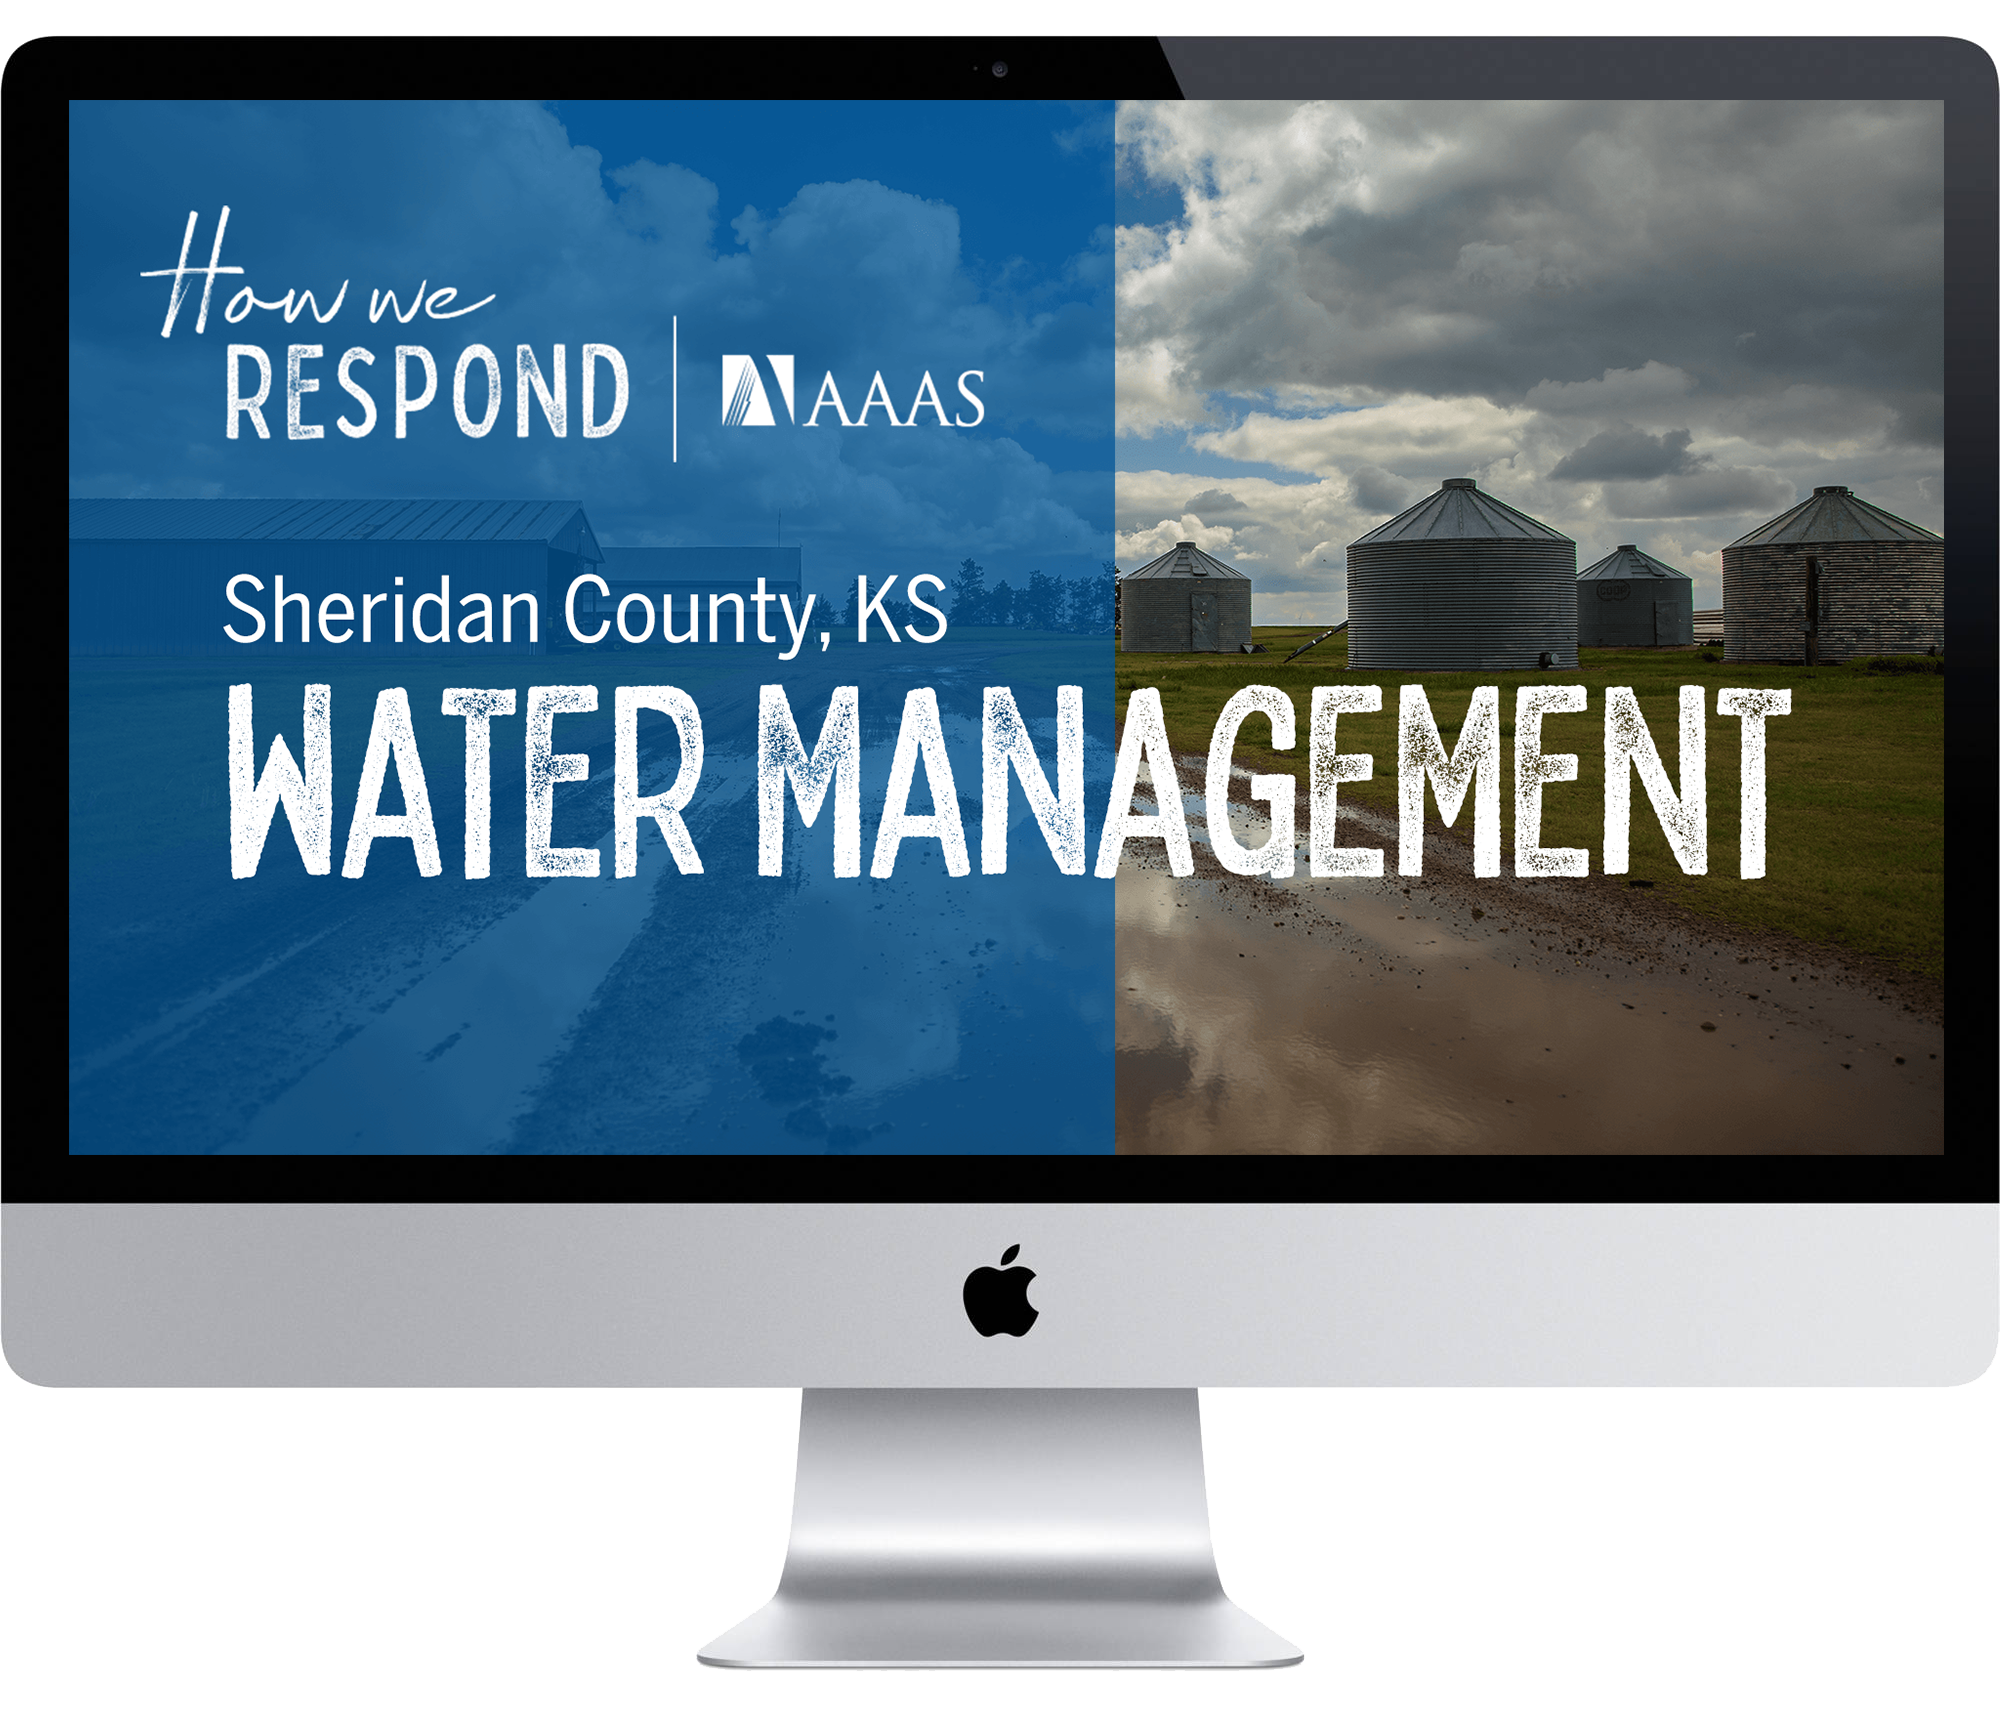 Sheridan County, KS - Water